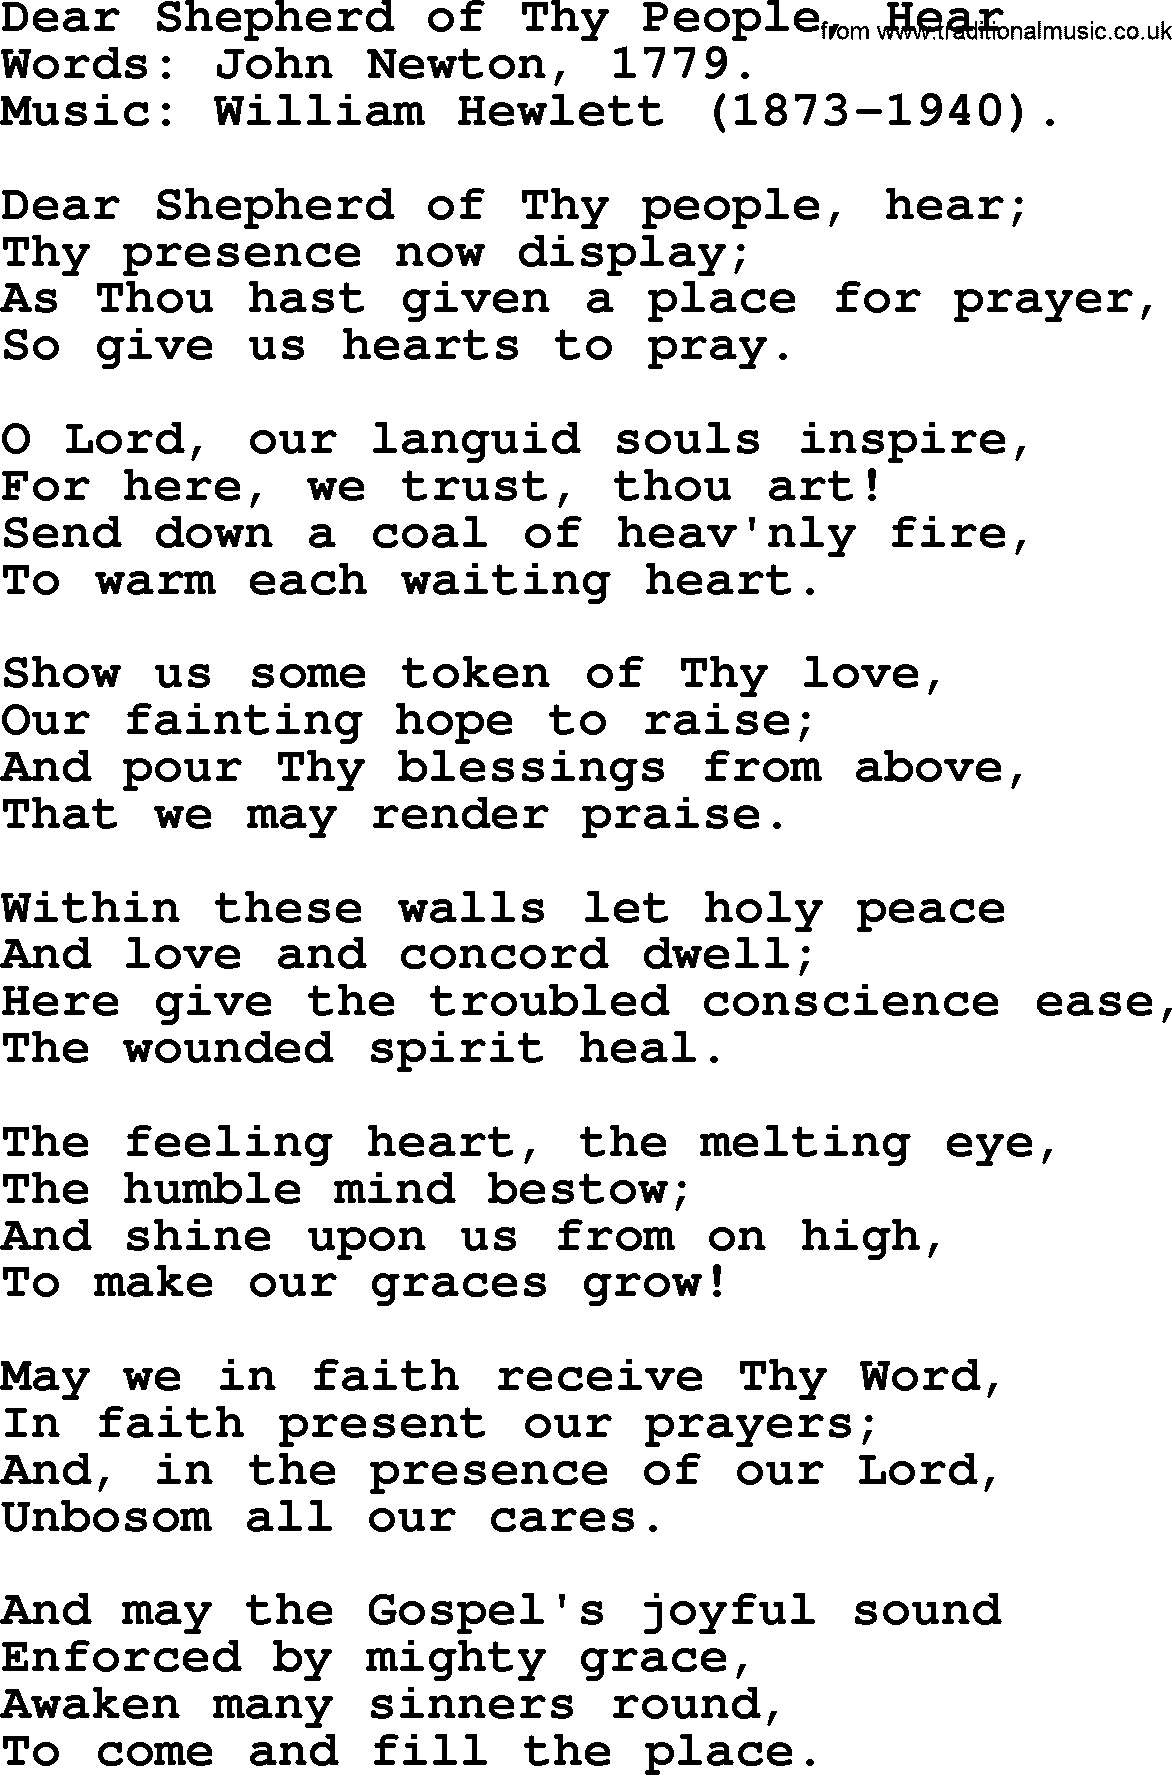 John Newton hymn: Dear Shepherd Of Thy People, Hear, lyrics